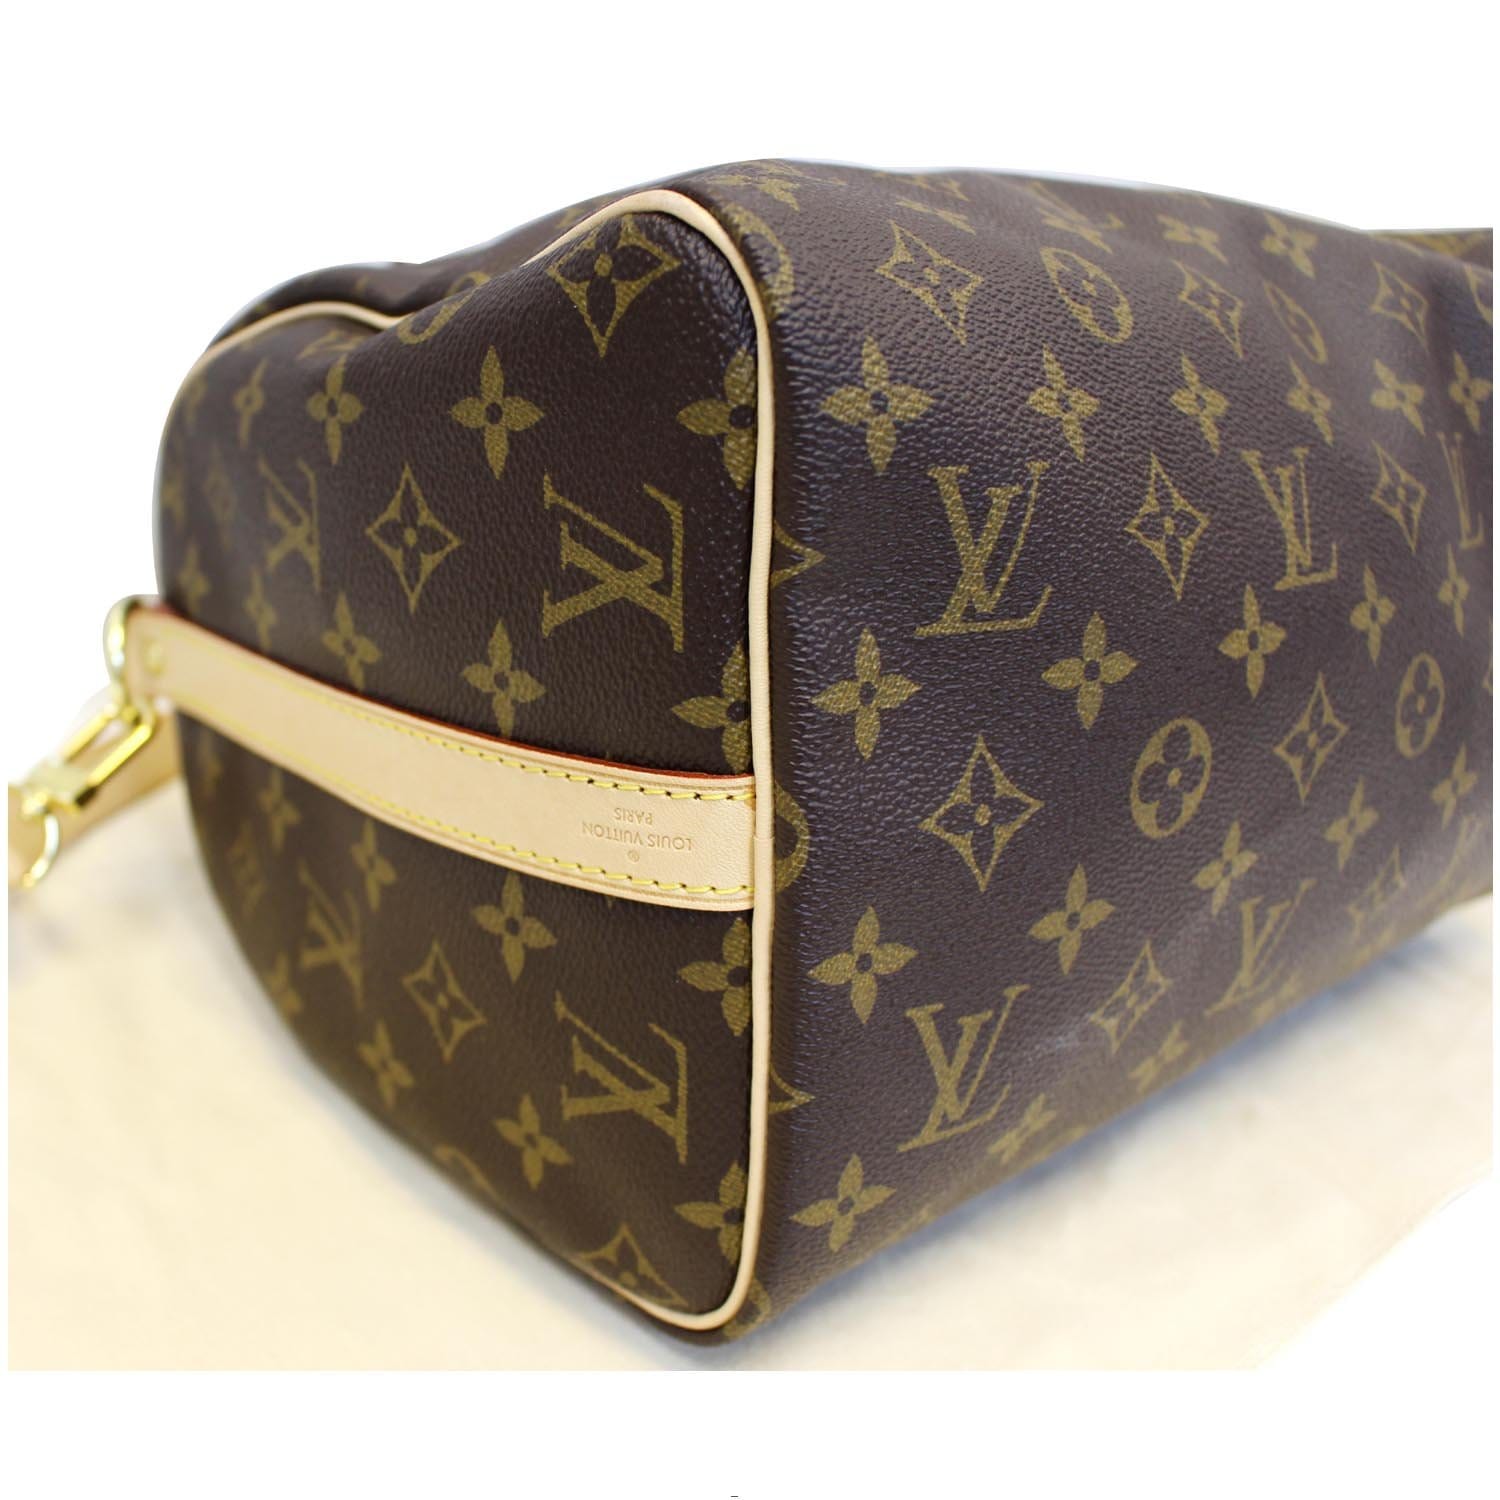 🔴 SOLD 🔴 $725 SHIPPED Pre-owned Authentic Louis Vuitton Speedy 30  Monogram Handbag/ Shoulder Bag Serial/ Date Code - VI0922 Beautiful…